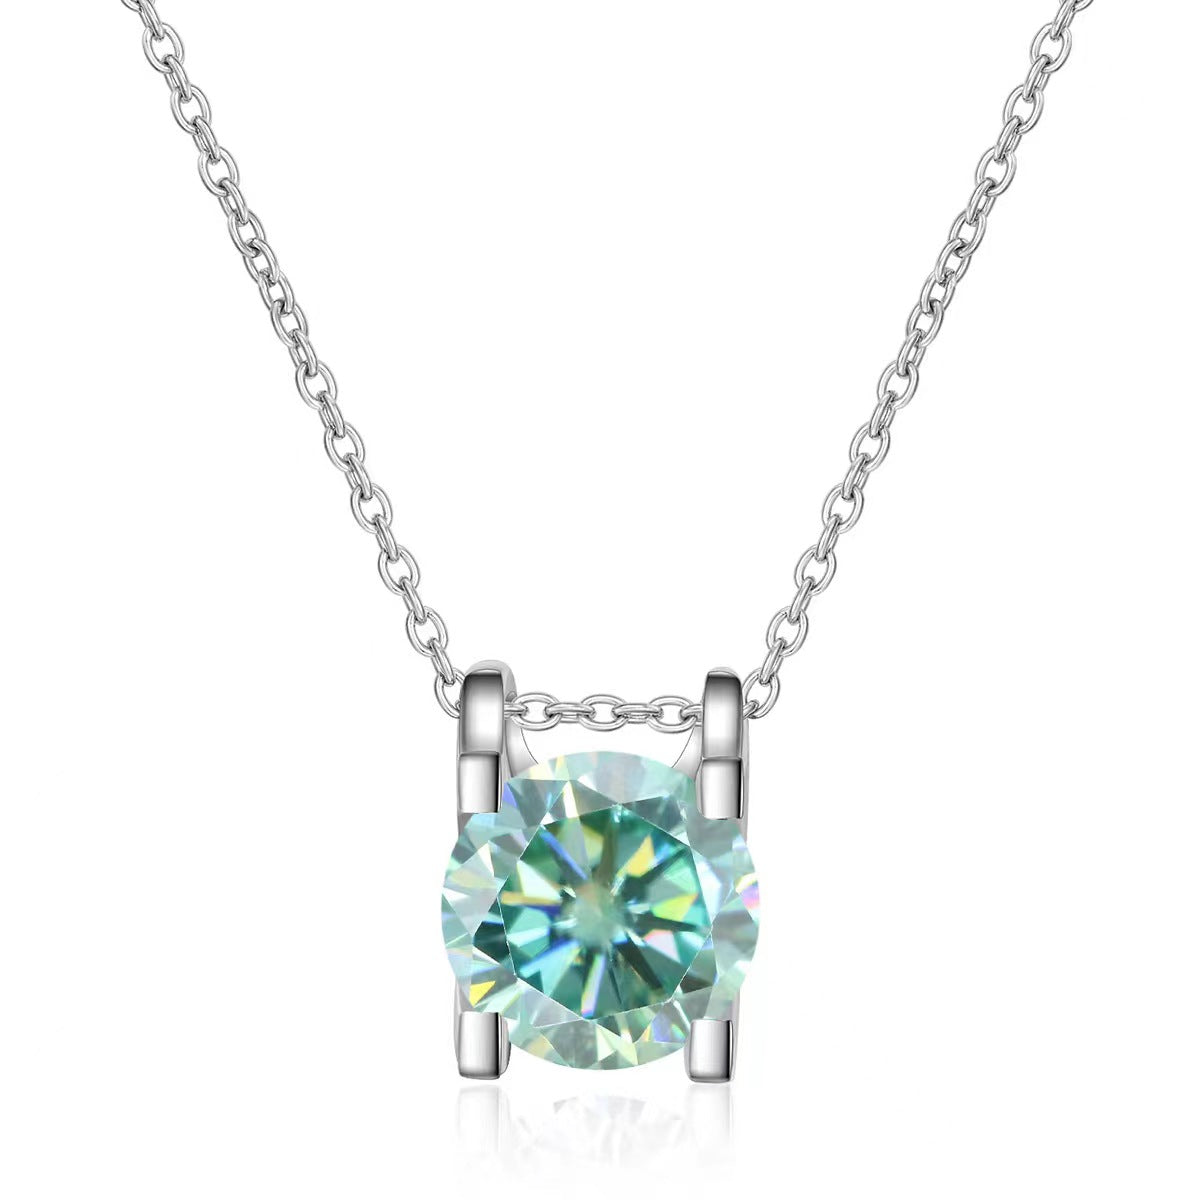 Blue Moissanite necklace for women